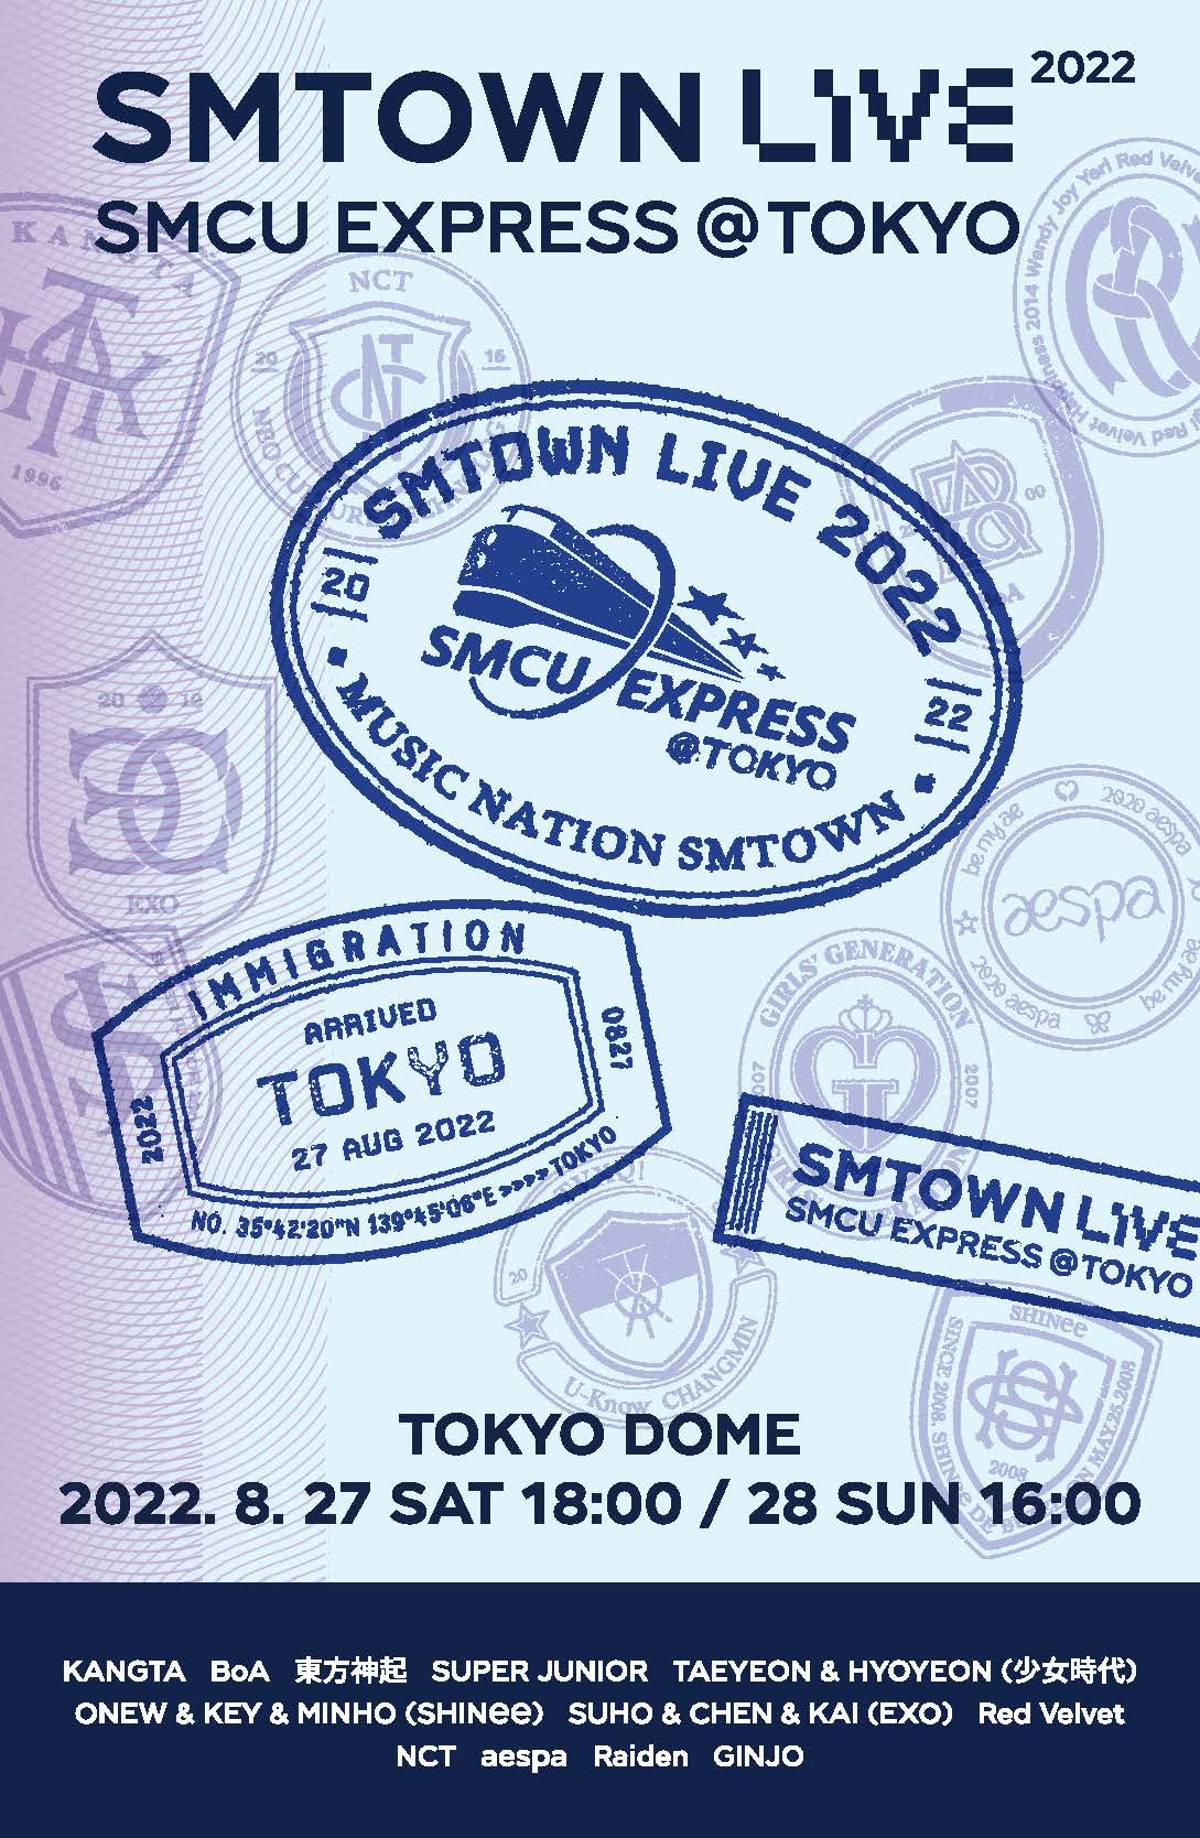 SMTOWN LIVE 2022 : SMCU EXPRESS@TOKYO